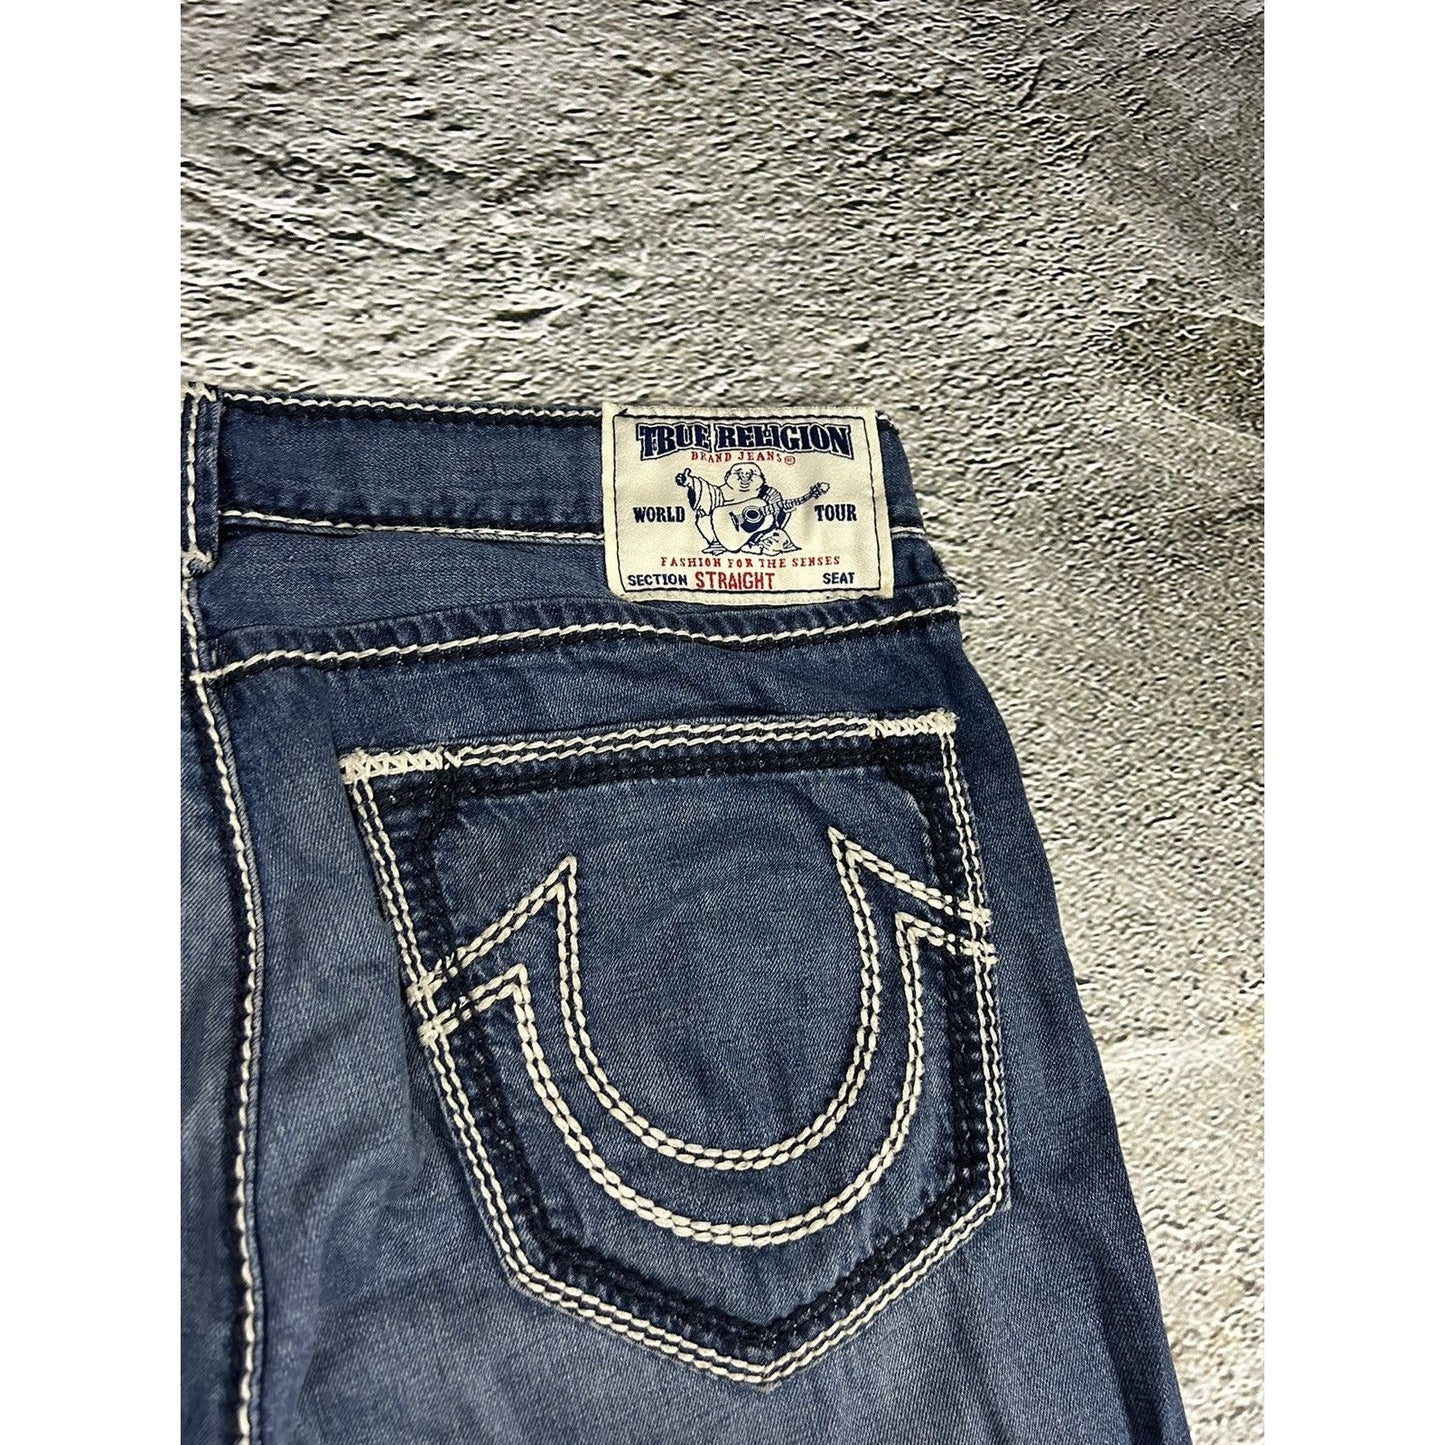 True Religion jeans navy black thick stitching straight